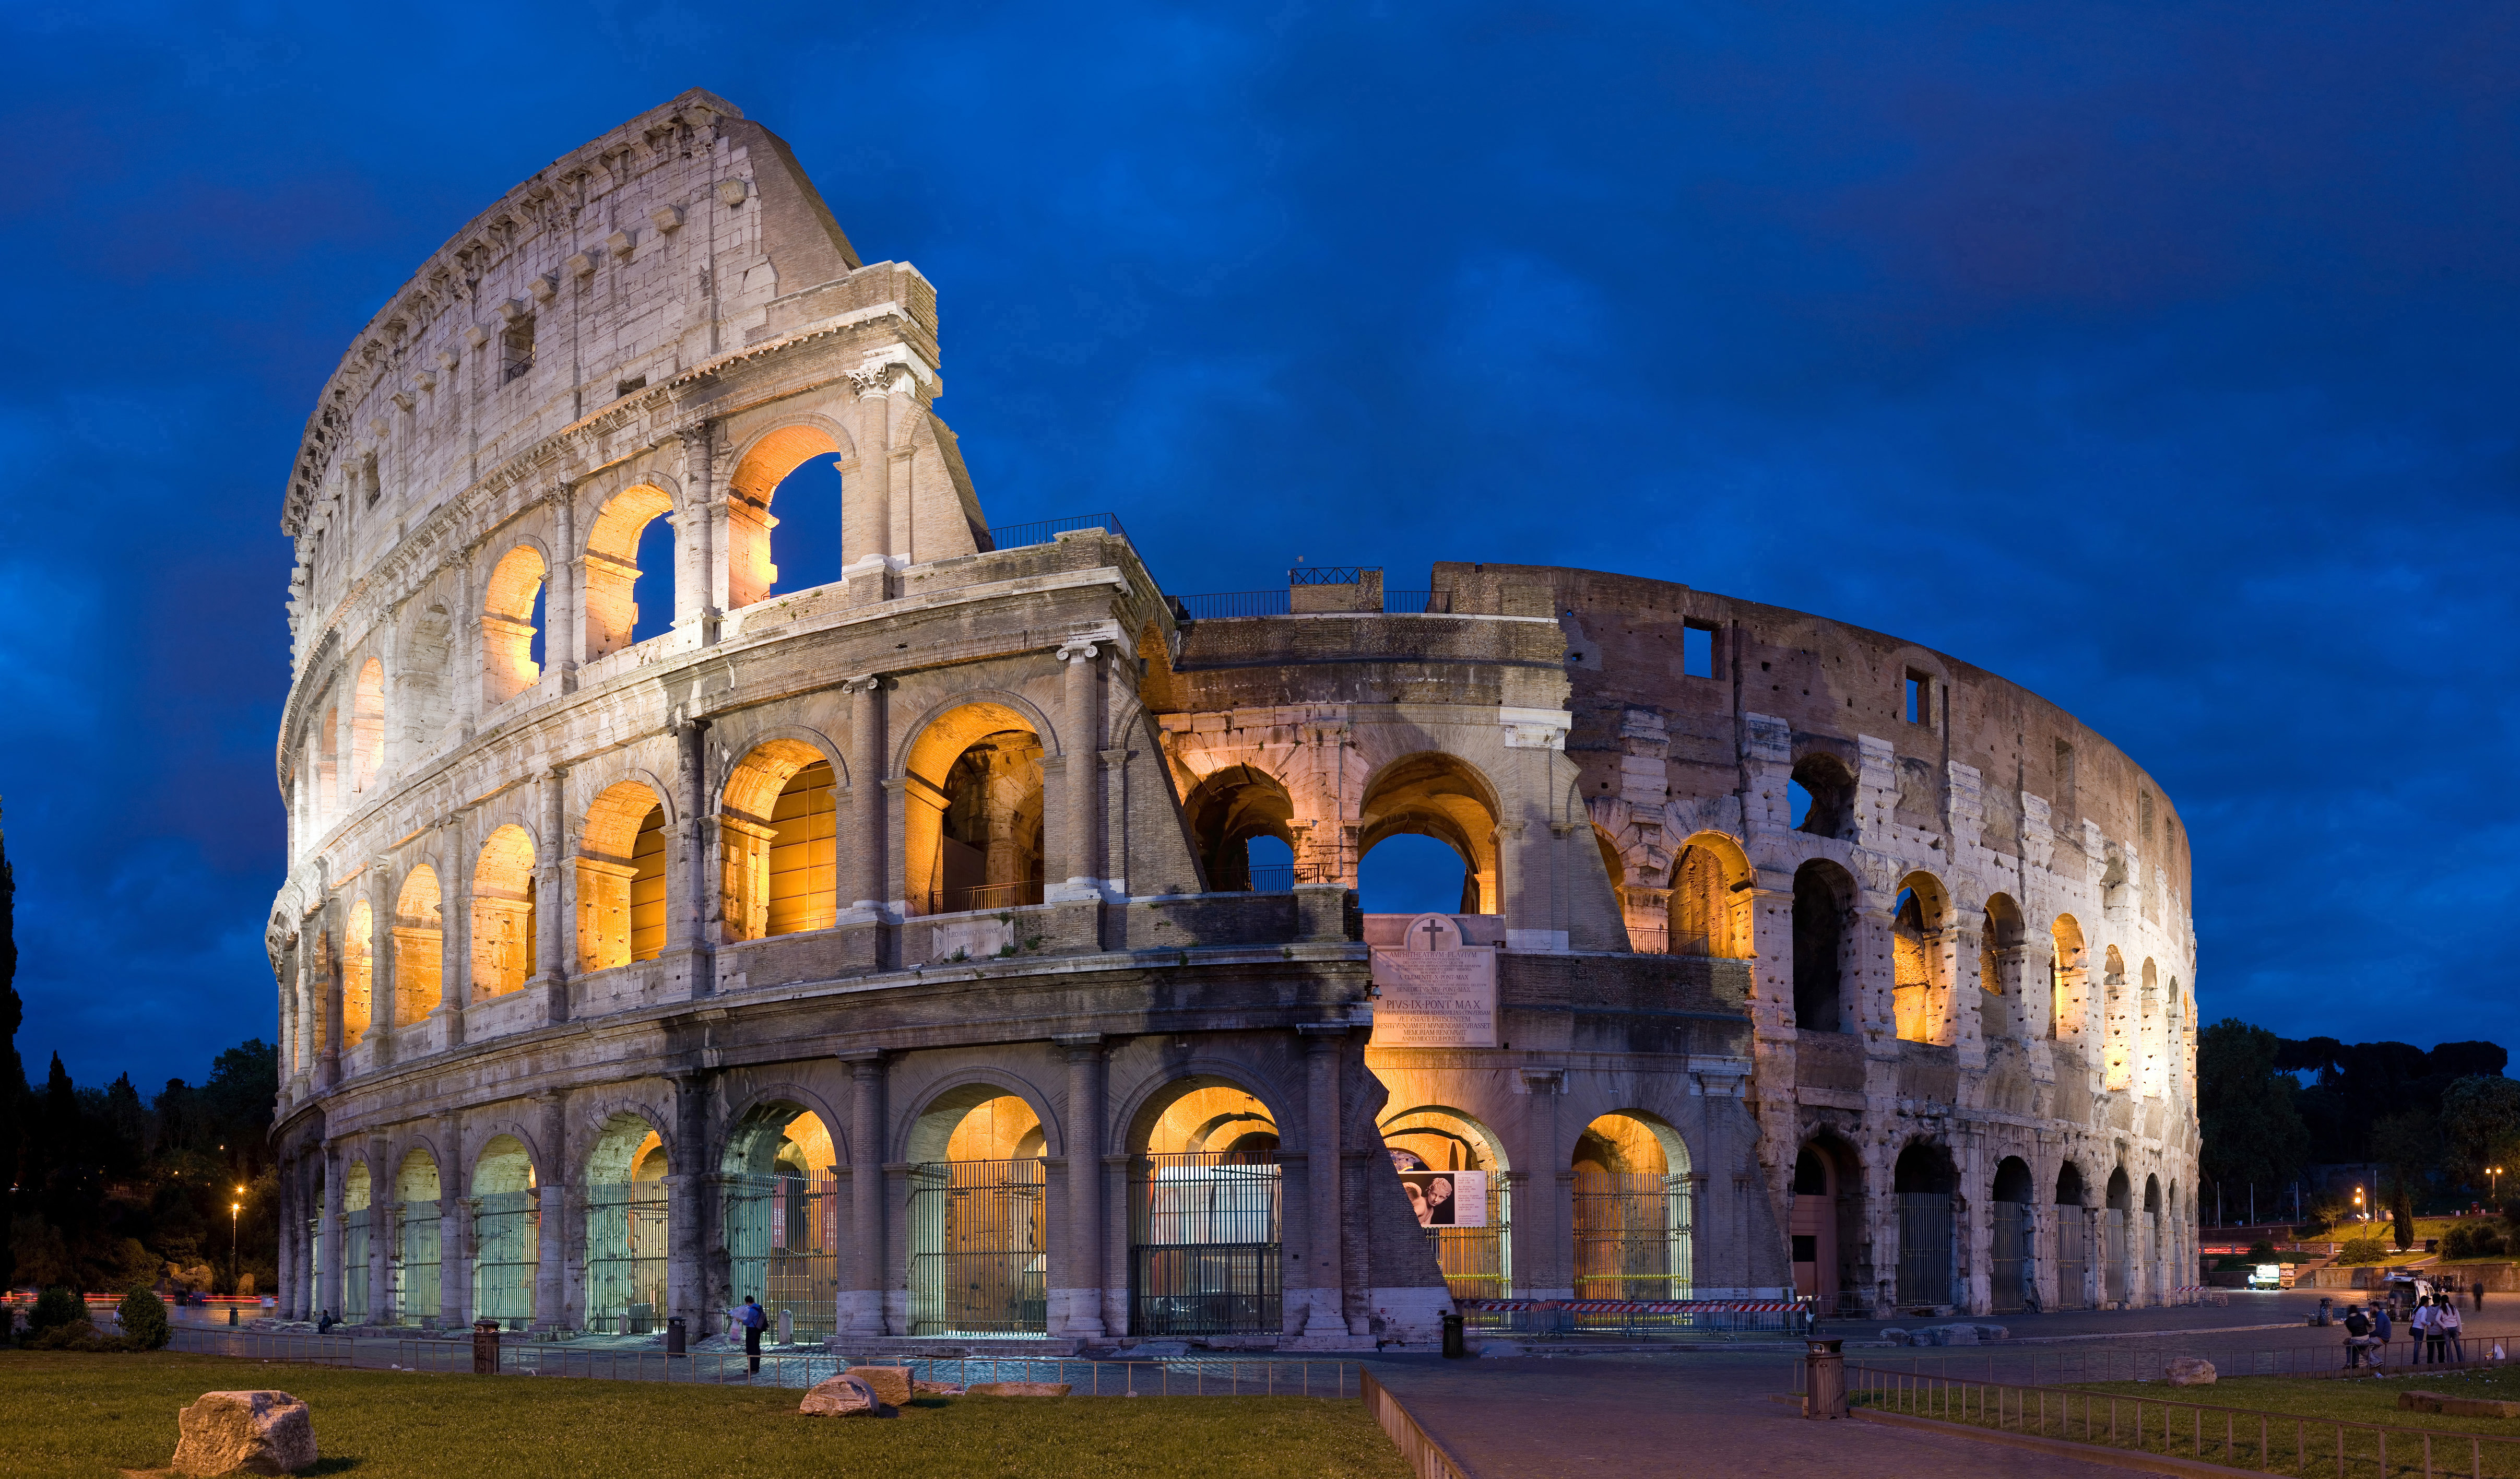 Colosseum 4k Ultra HD Wallpaper by David Iliff